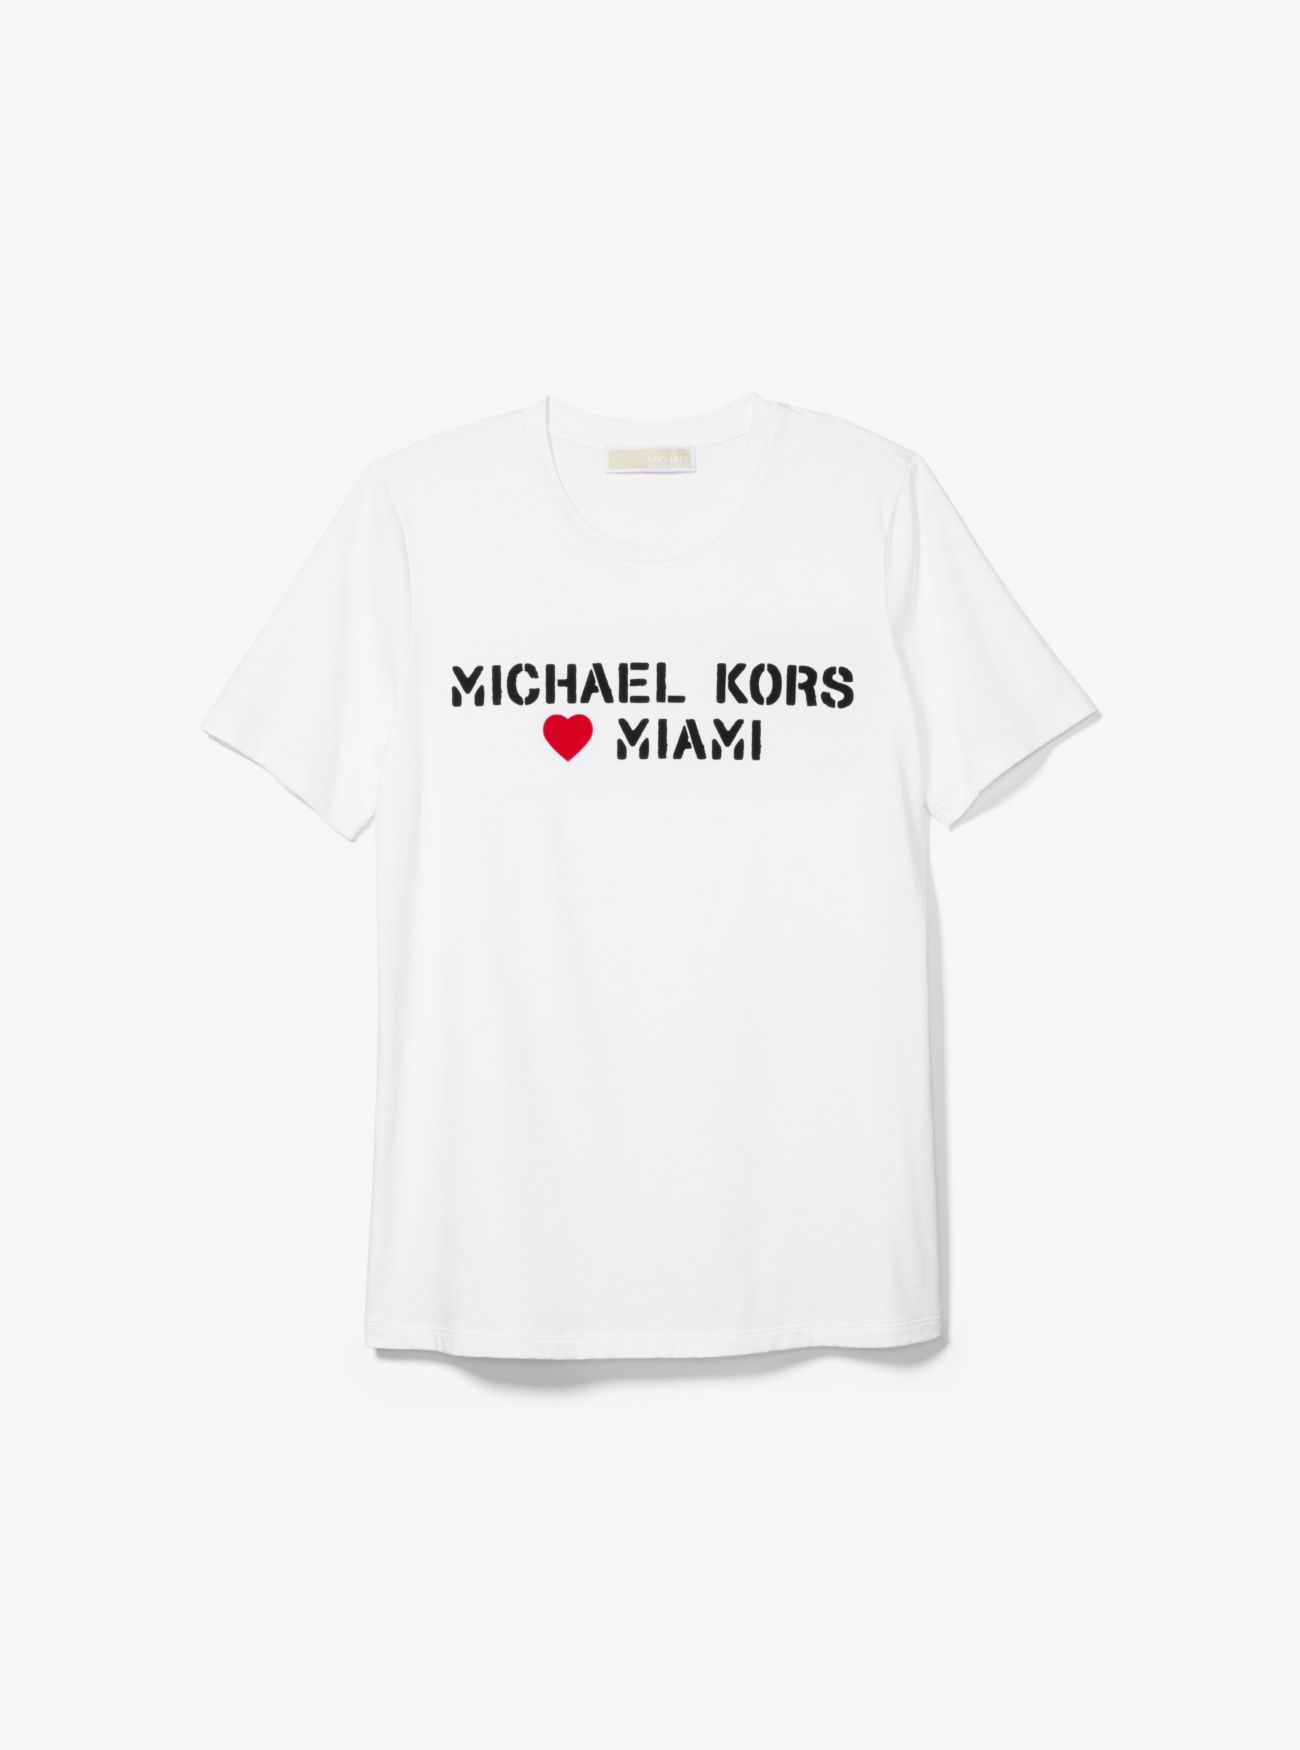 Футболка унисекс из хлопкового джерси MK Loves Miami Michael Kors